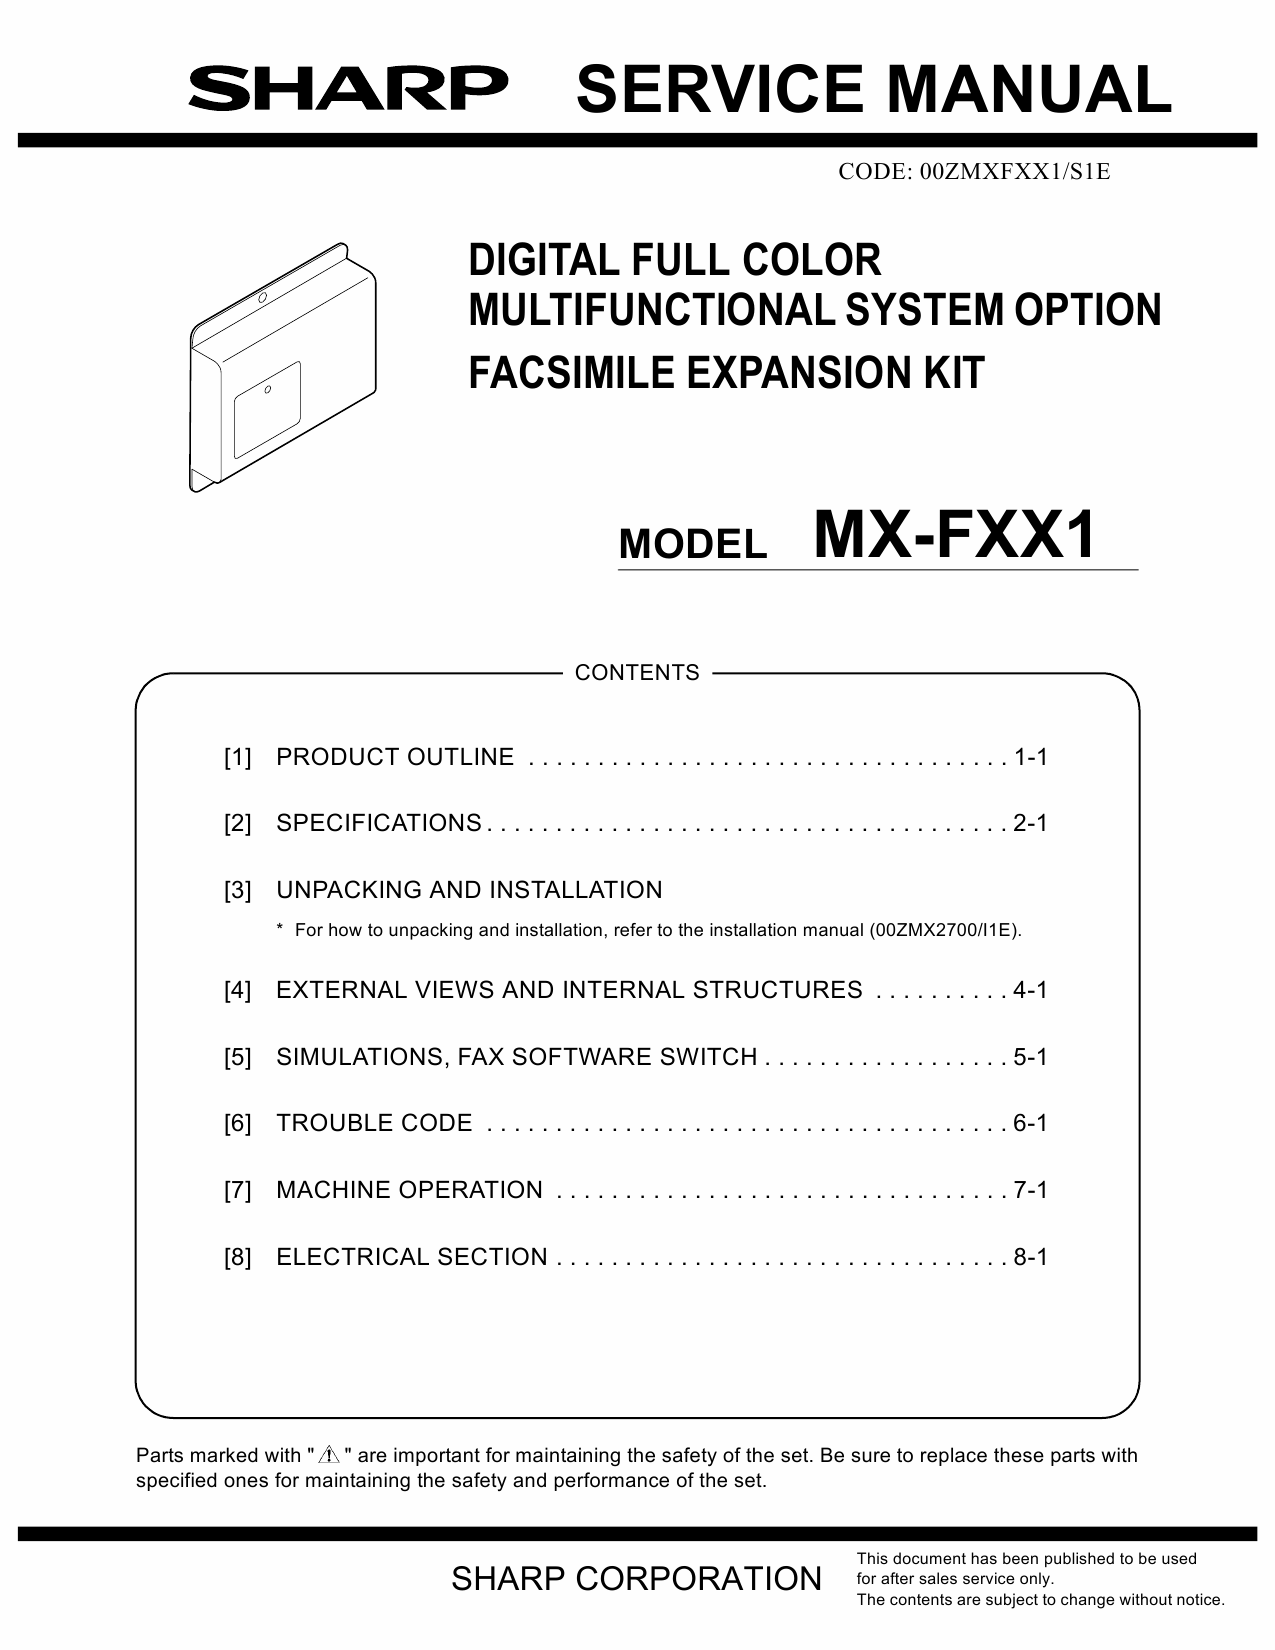 SHARP MX FXX1 Service Manual-1